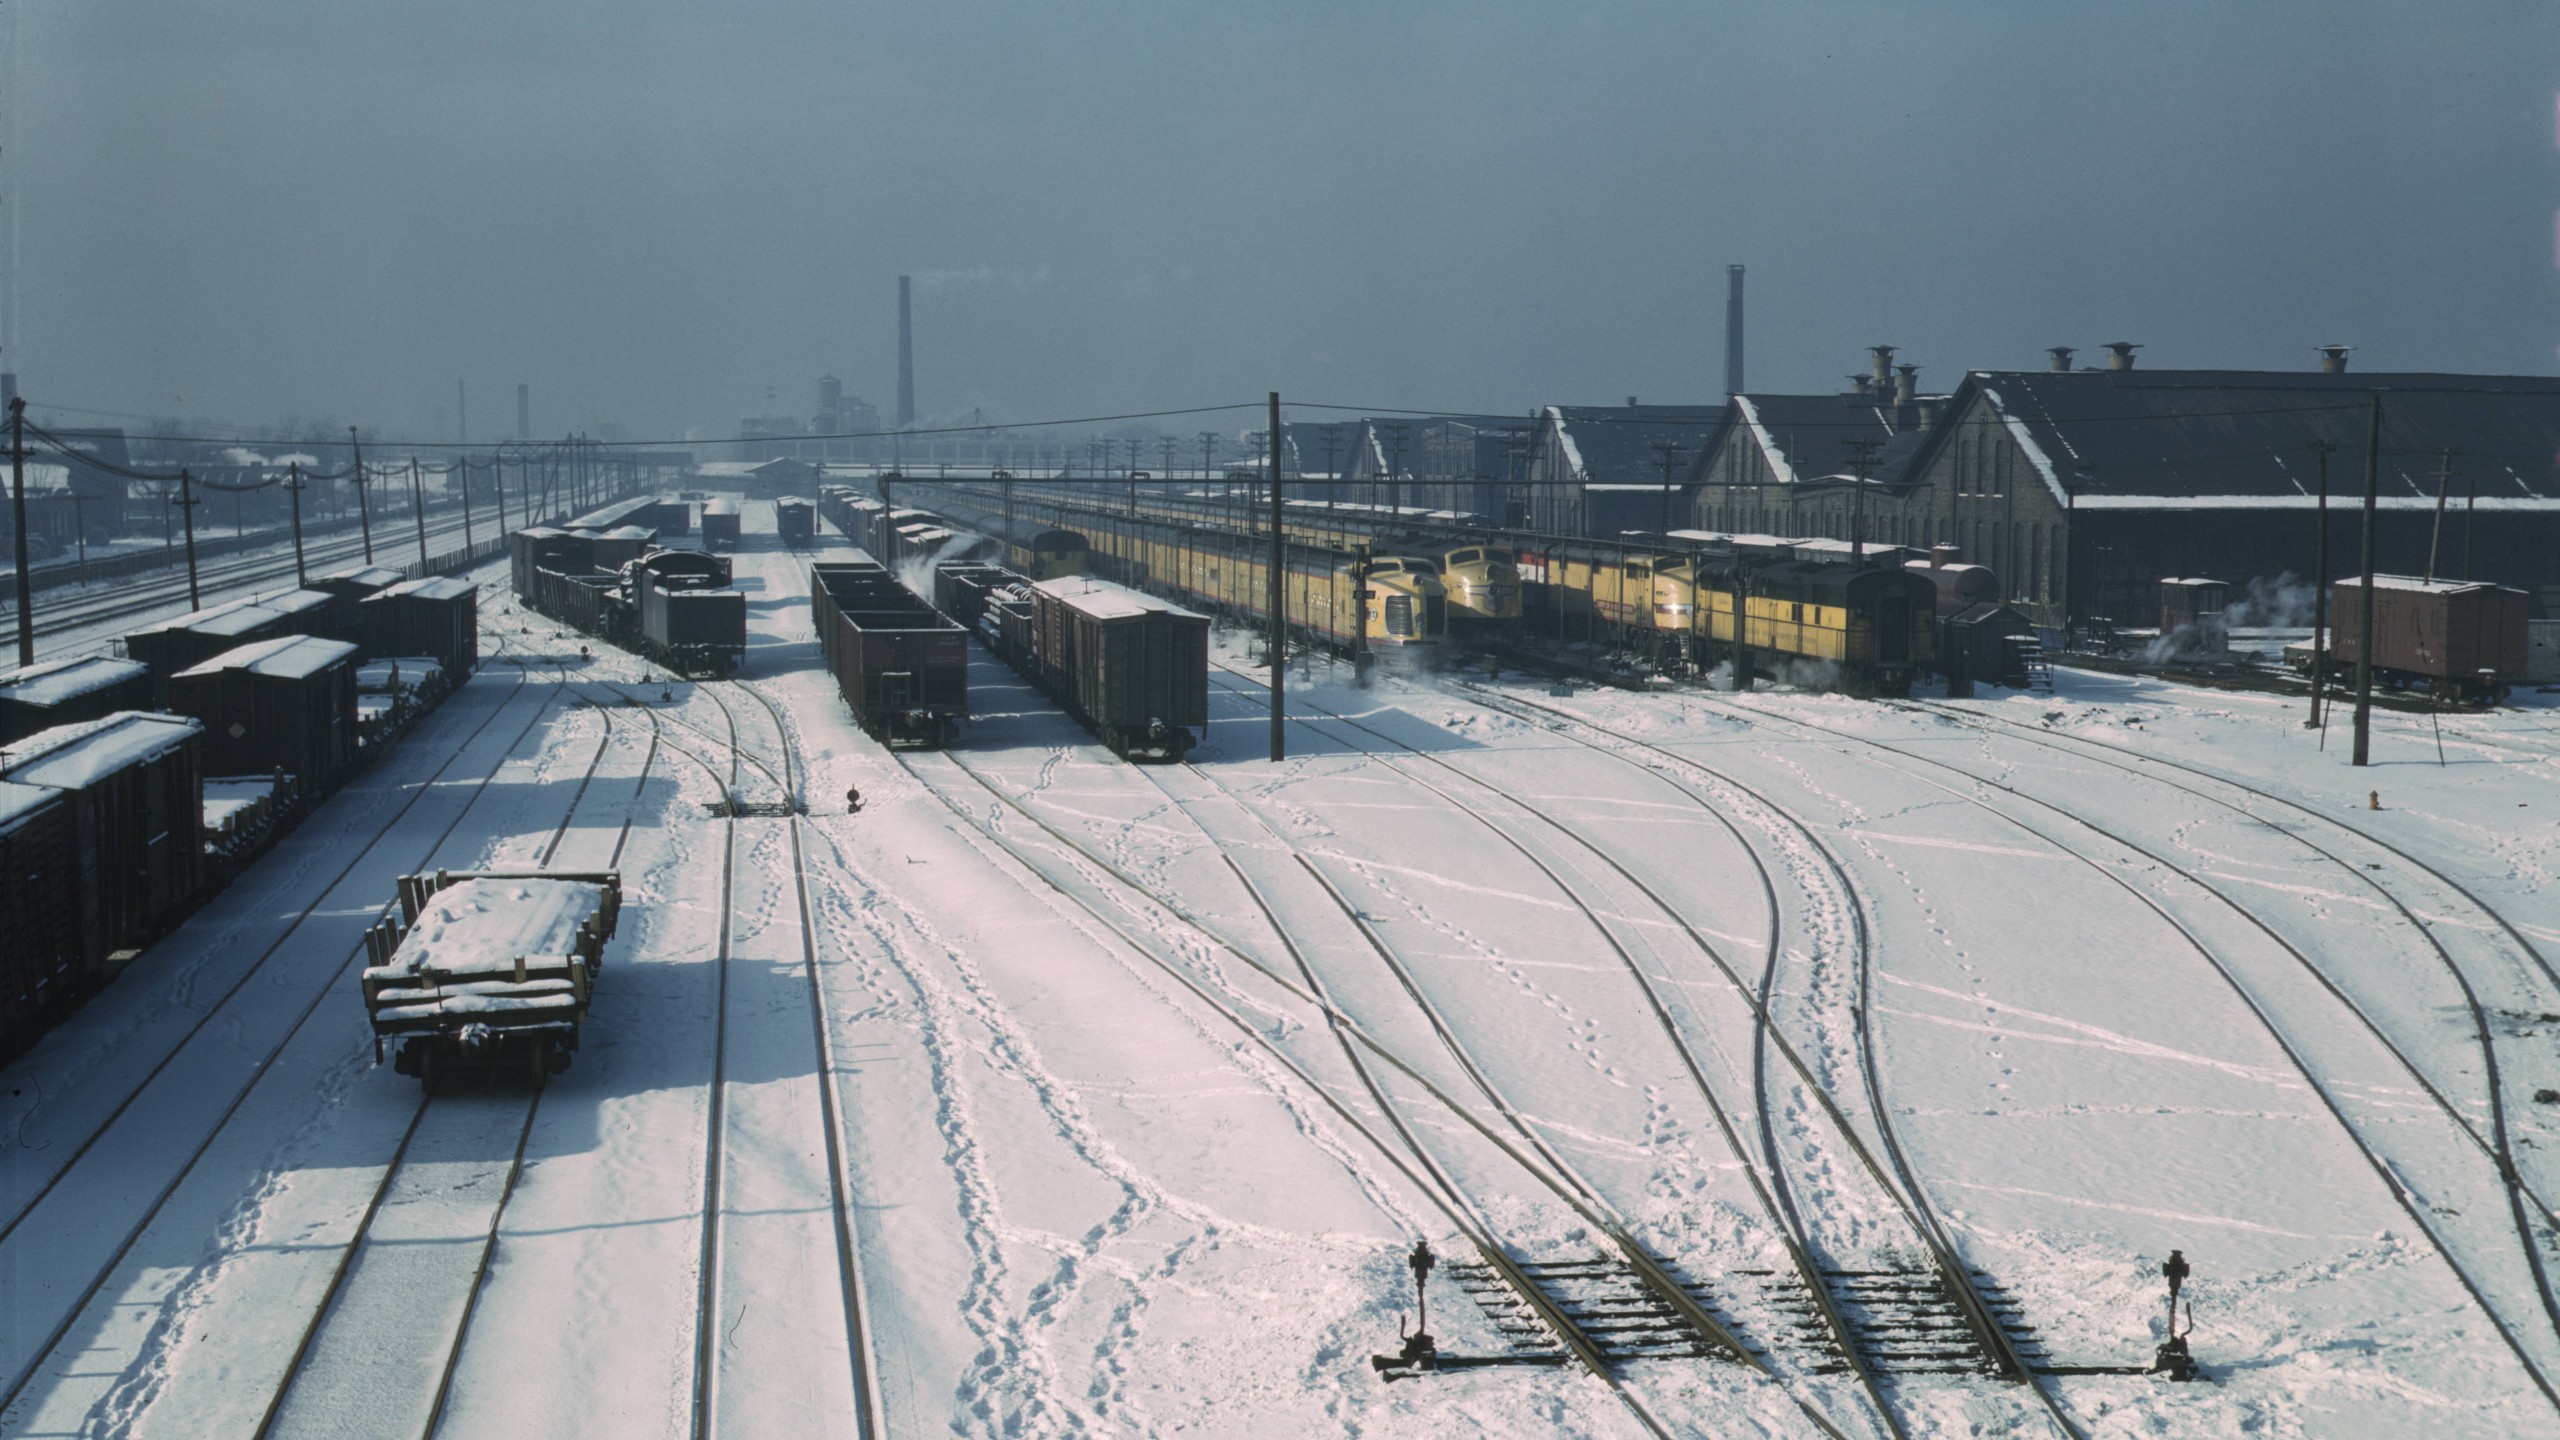 General 2560x1440 train train station freight train railway rail yard winter cold ice snow vehicle locomotive